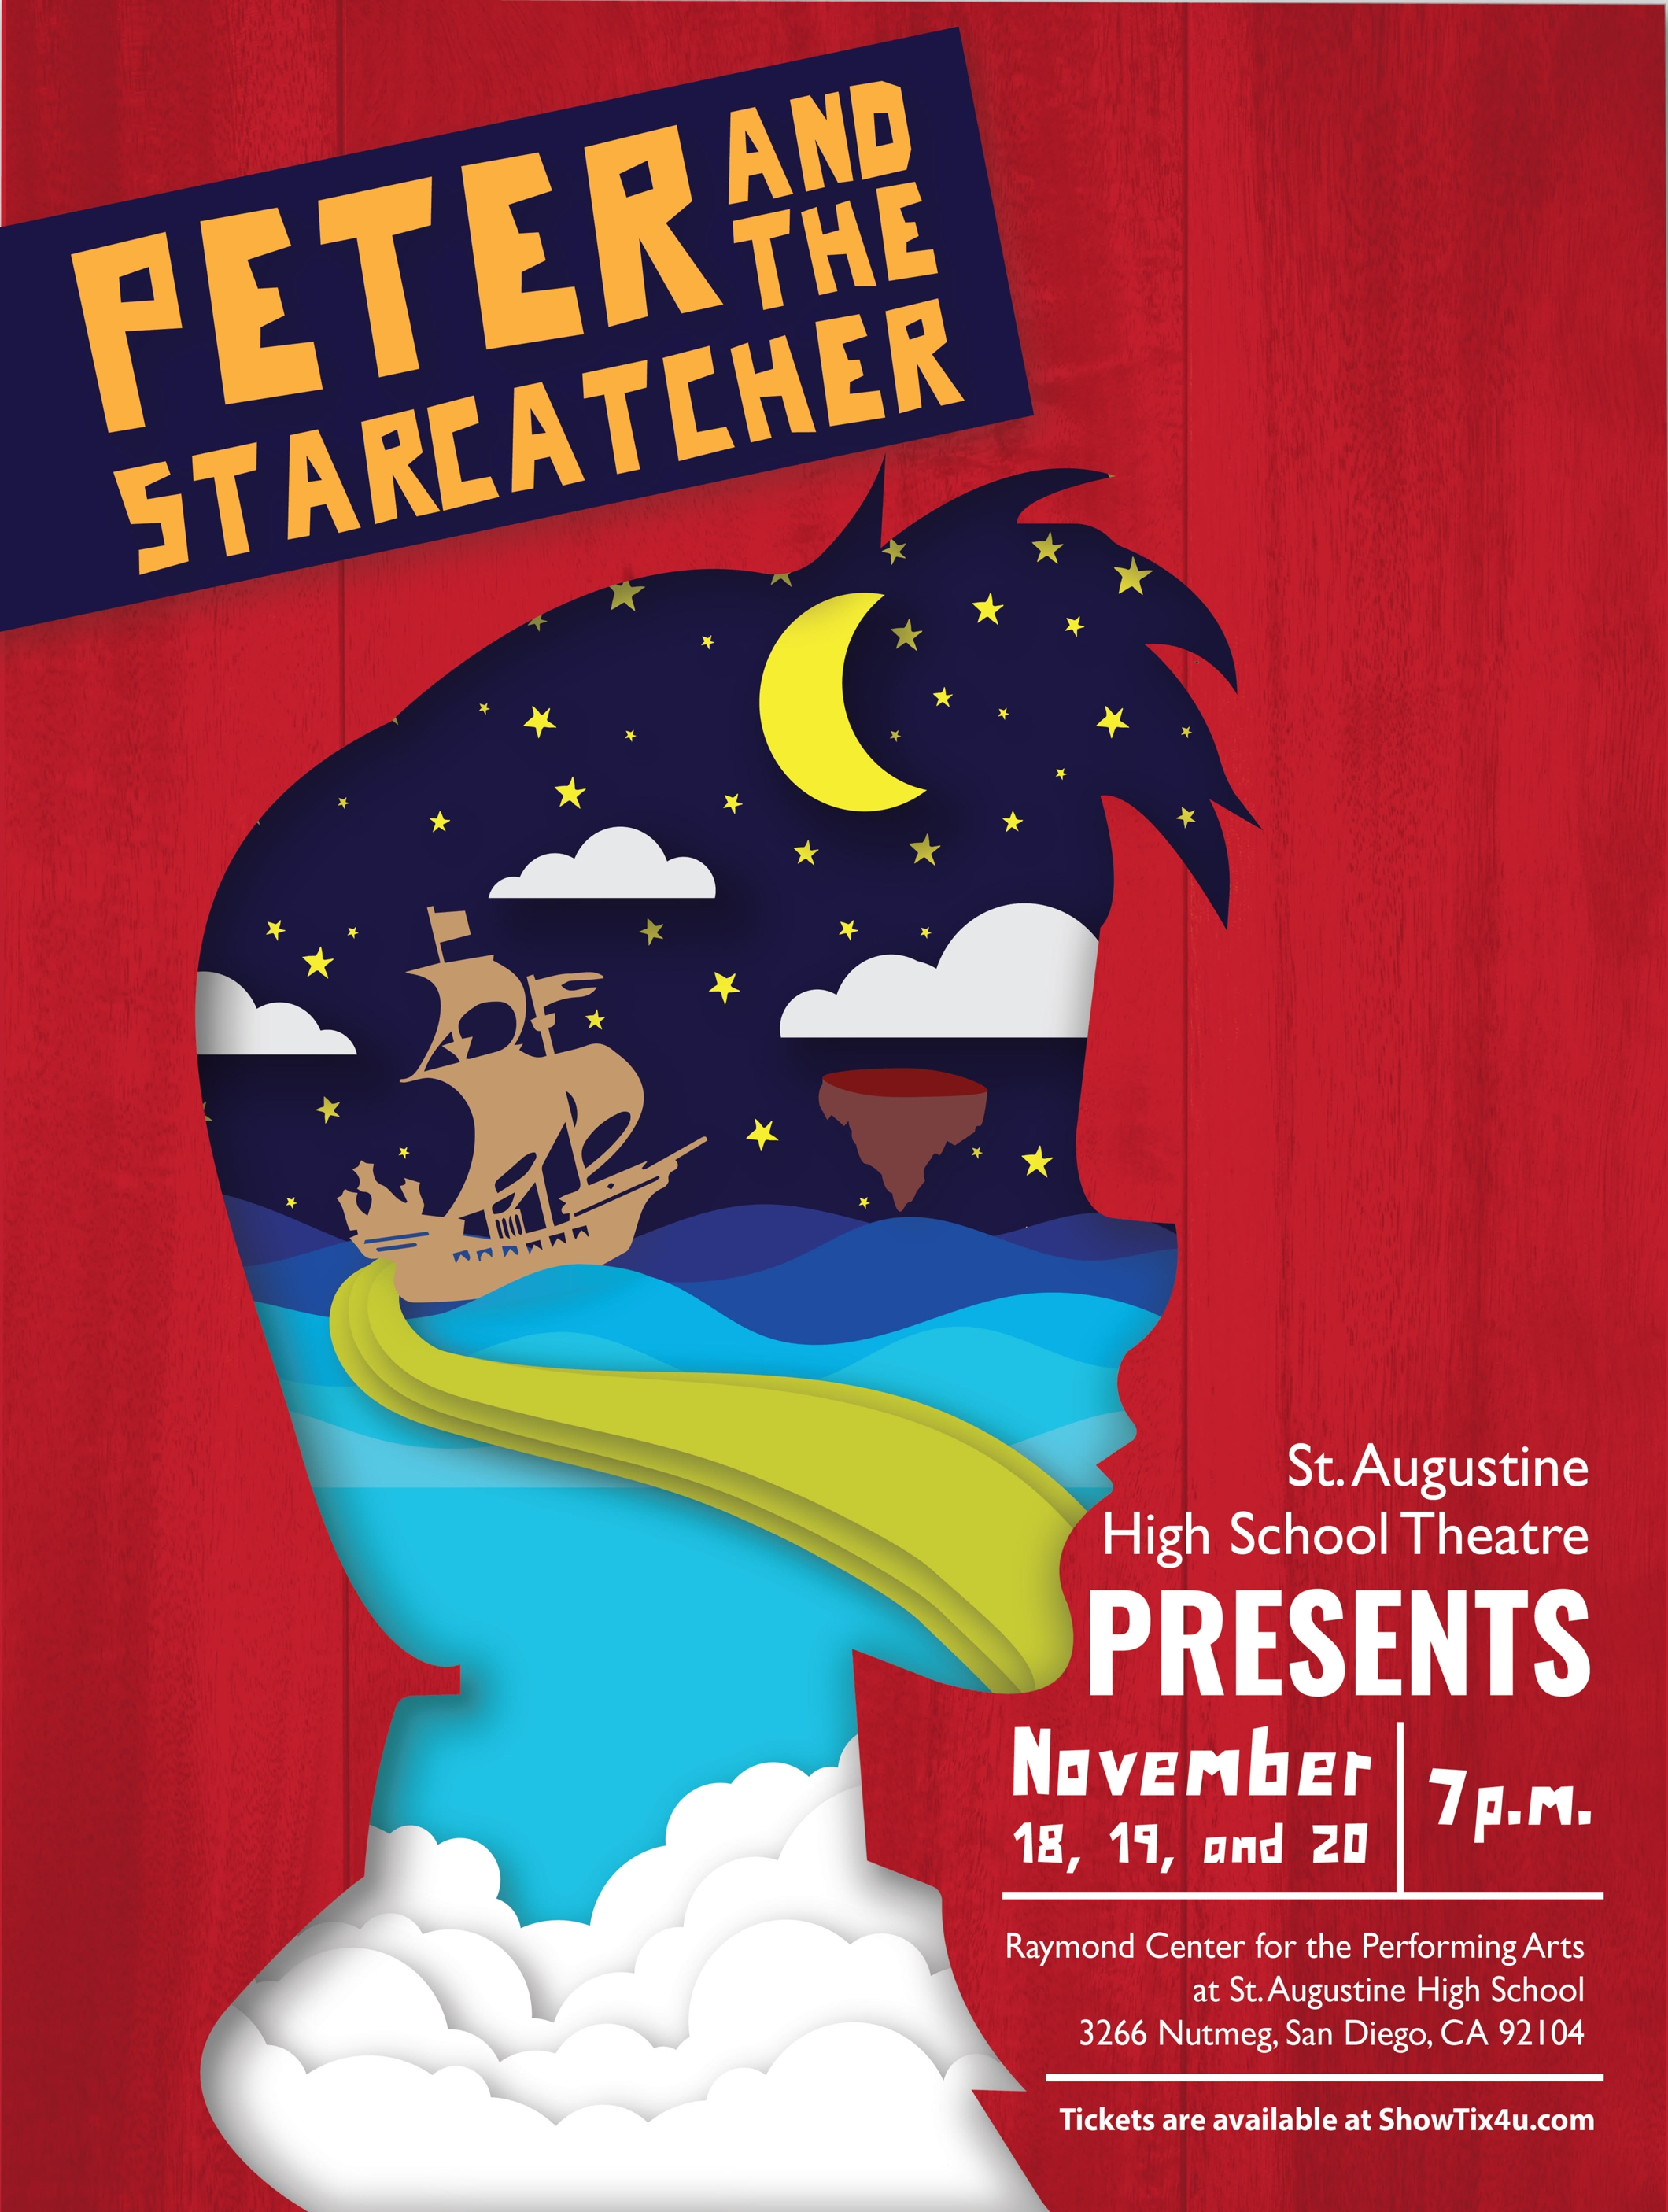 California High School Presents: Peter and the Starcatcher